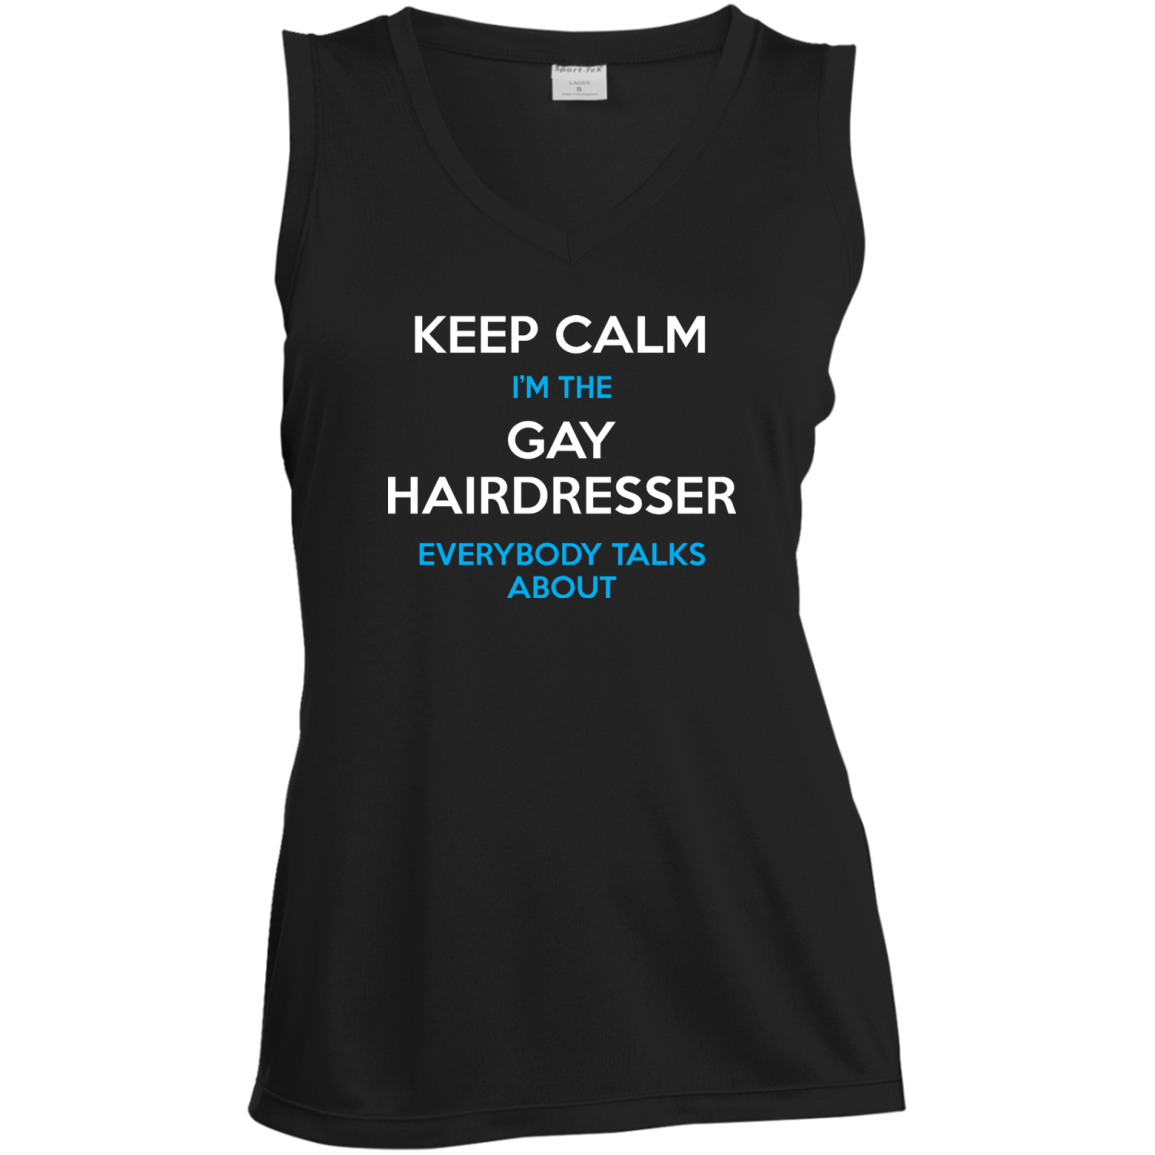 Keep Calm I'm The Gay Hairdresser black sleevless tshirt for women